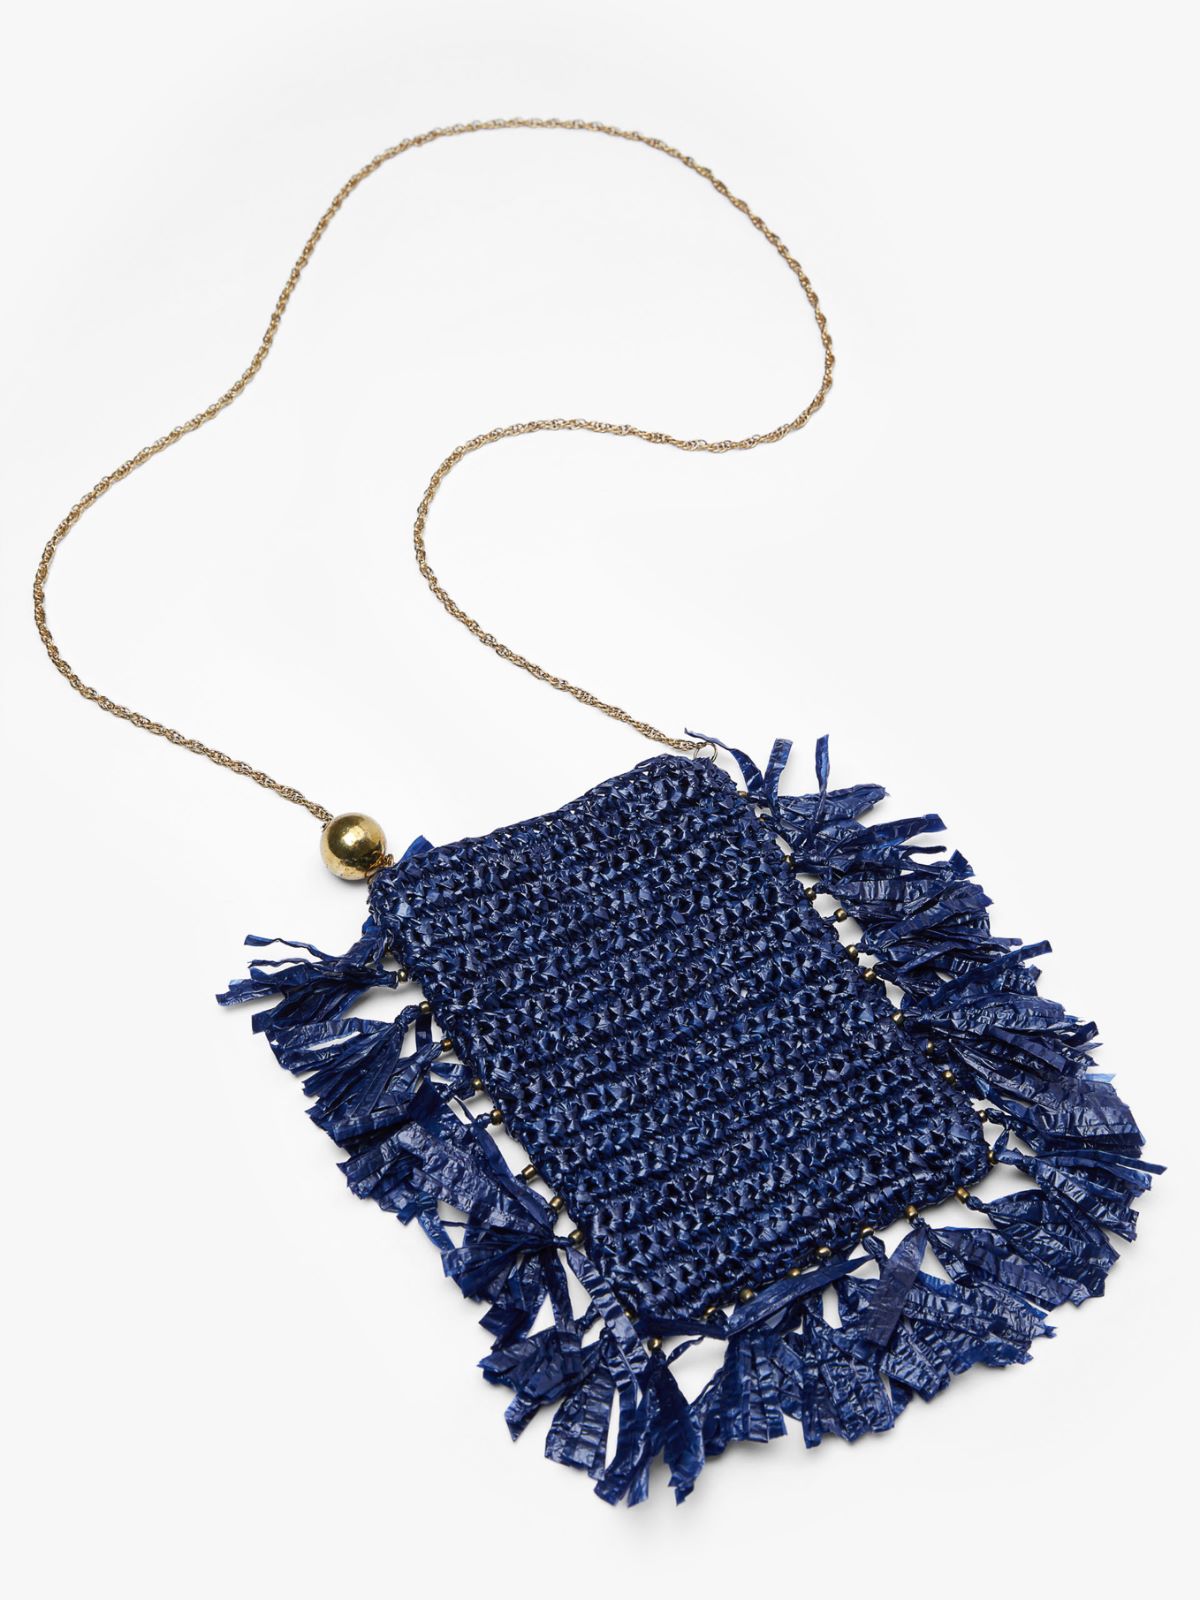 Smartphone mini bag in fabric - MIDNIGHTBLUE - Weekend Max Mara - 2